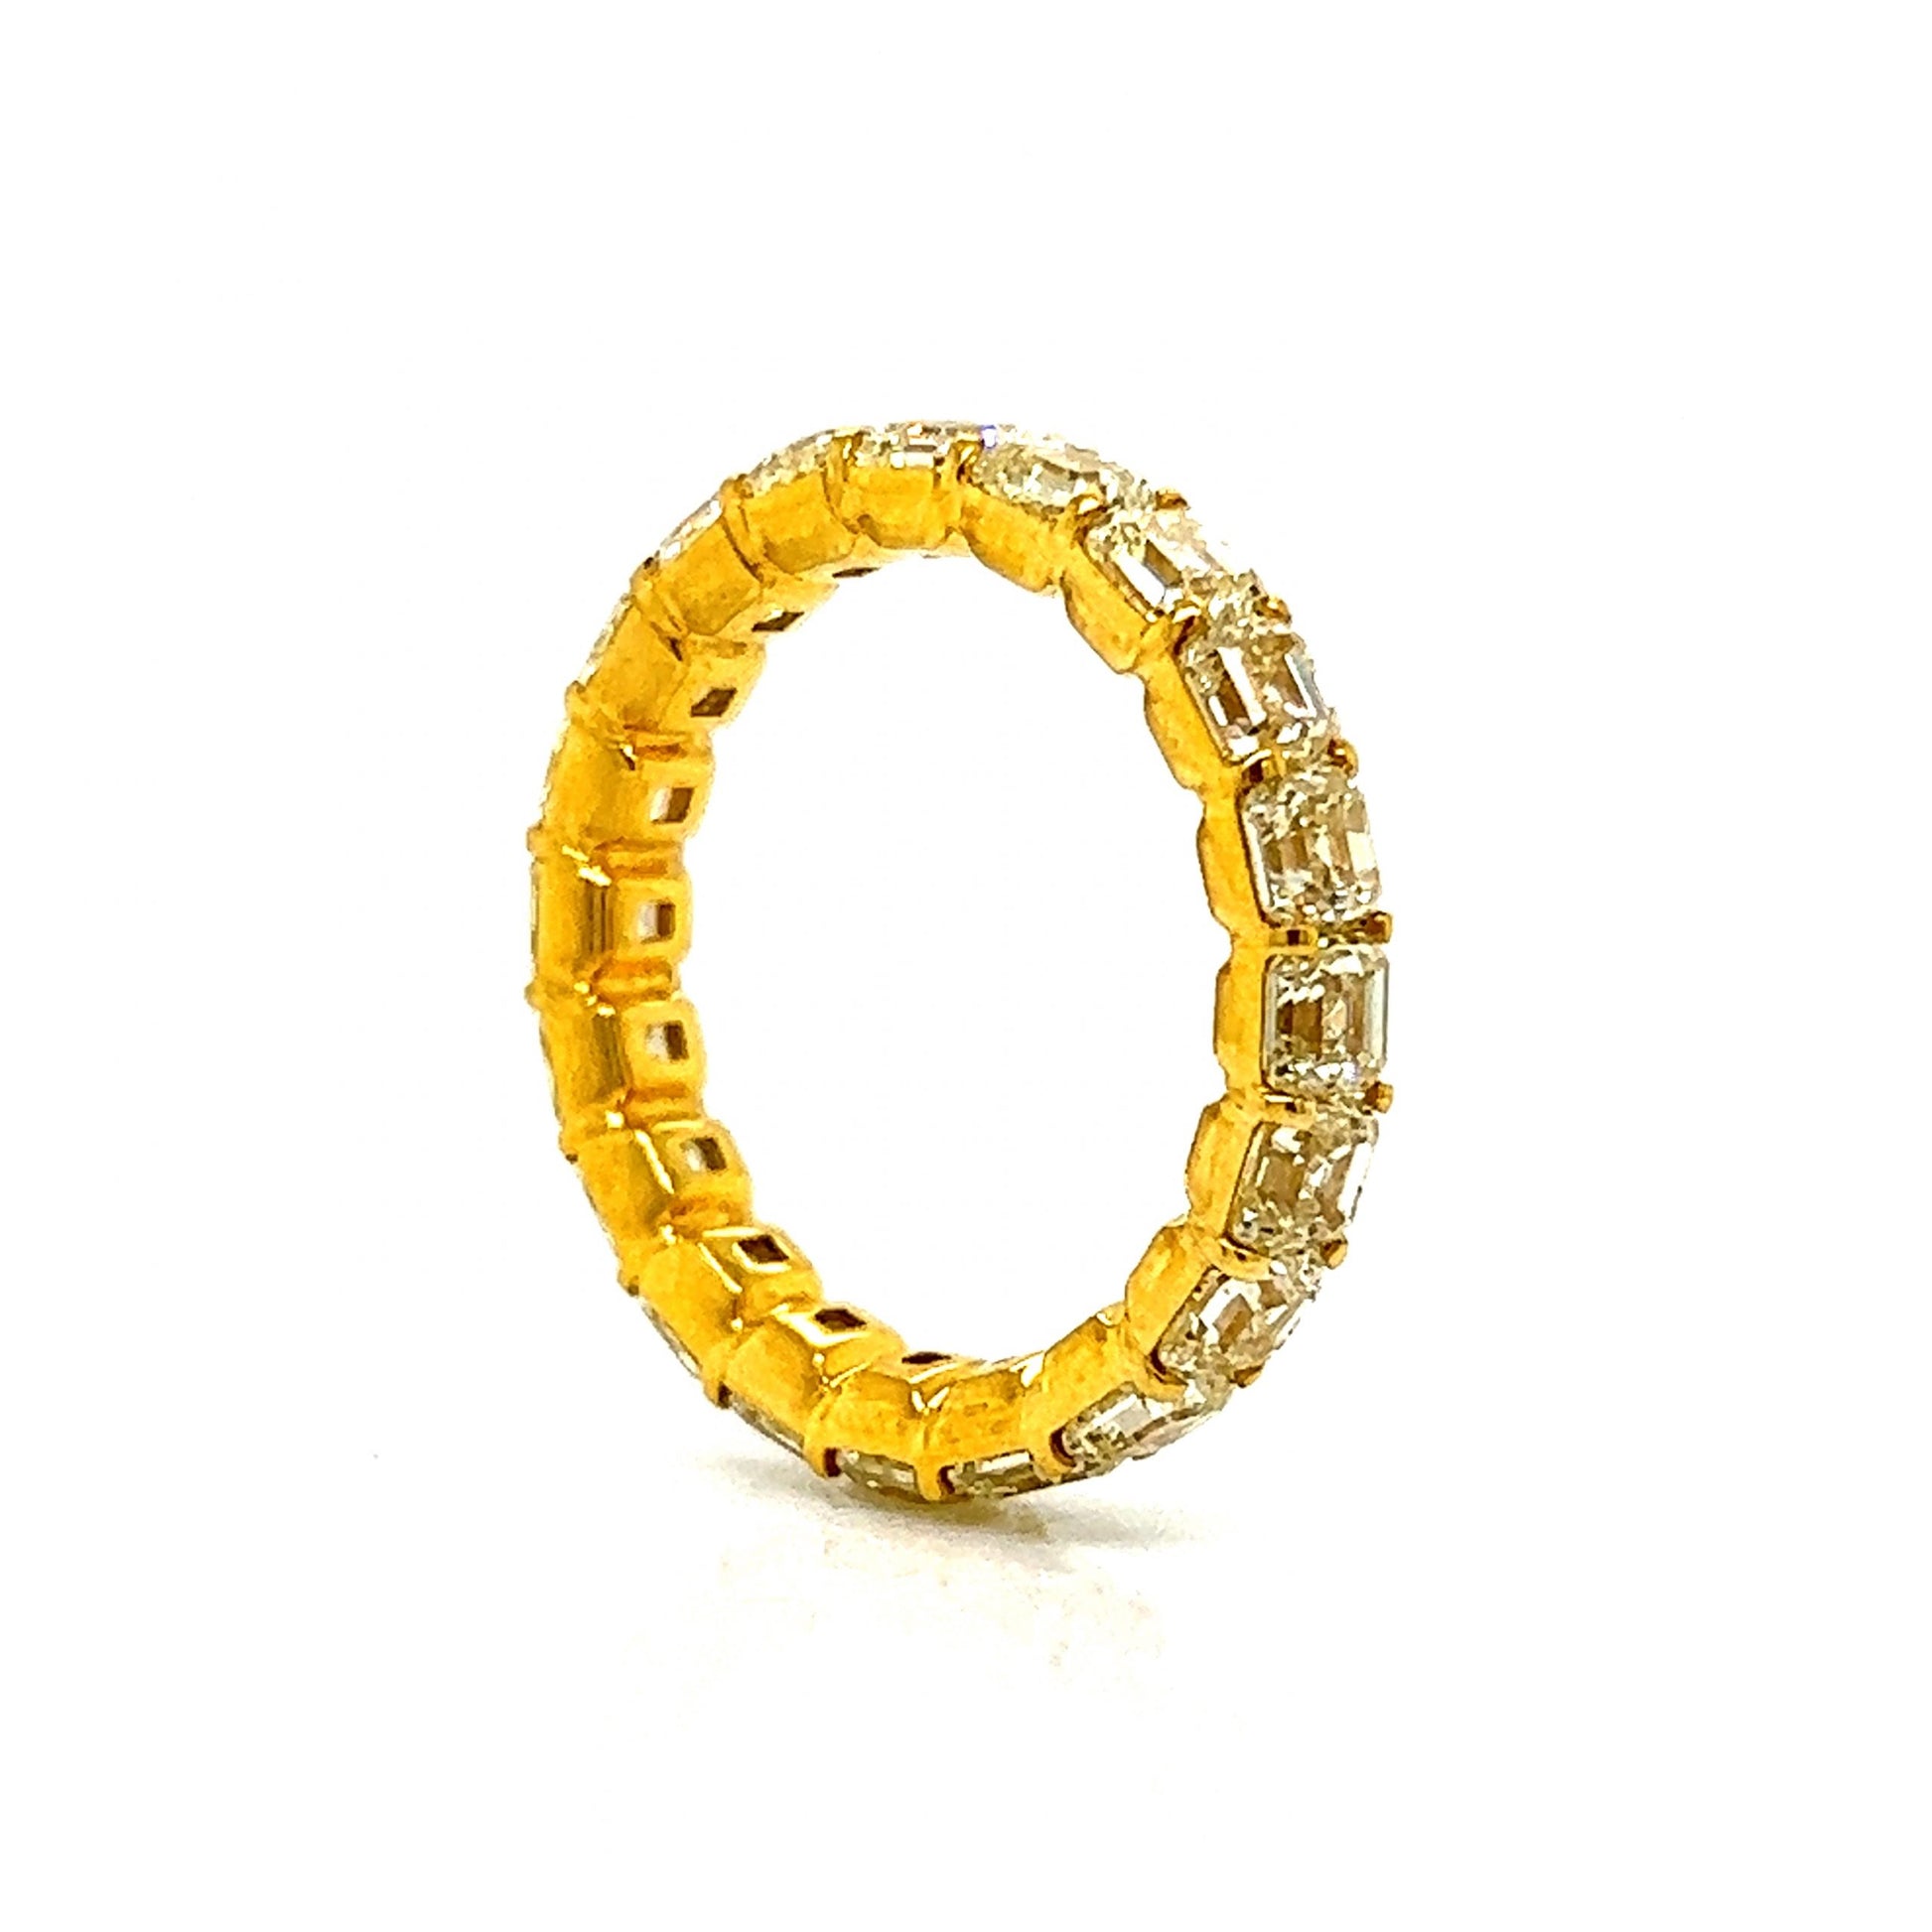 5.58 Fancy Yellow Asscher Cut Diamond Eternity Band in 18kComposition: 18 Karat Yellow Gold Ring Size: 7 Total Diamond Weight: 5.58ct Total Gram Weight: 3.4 g